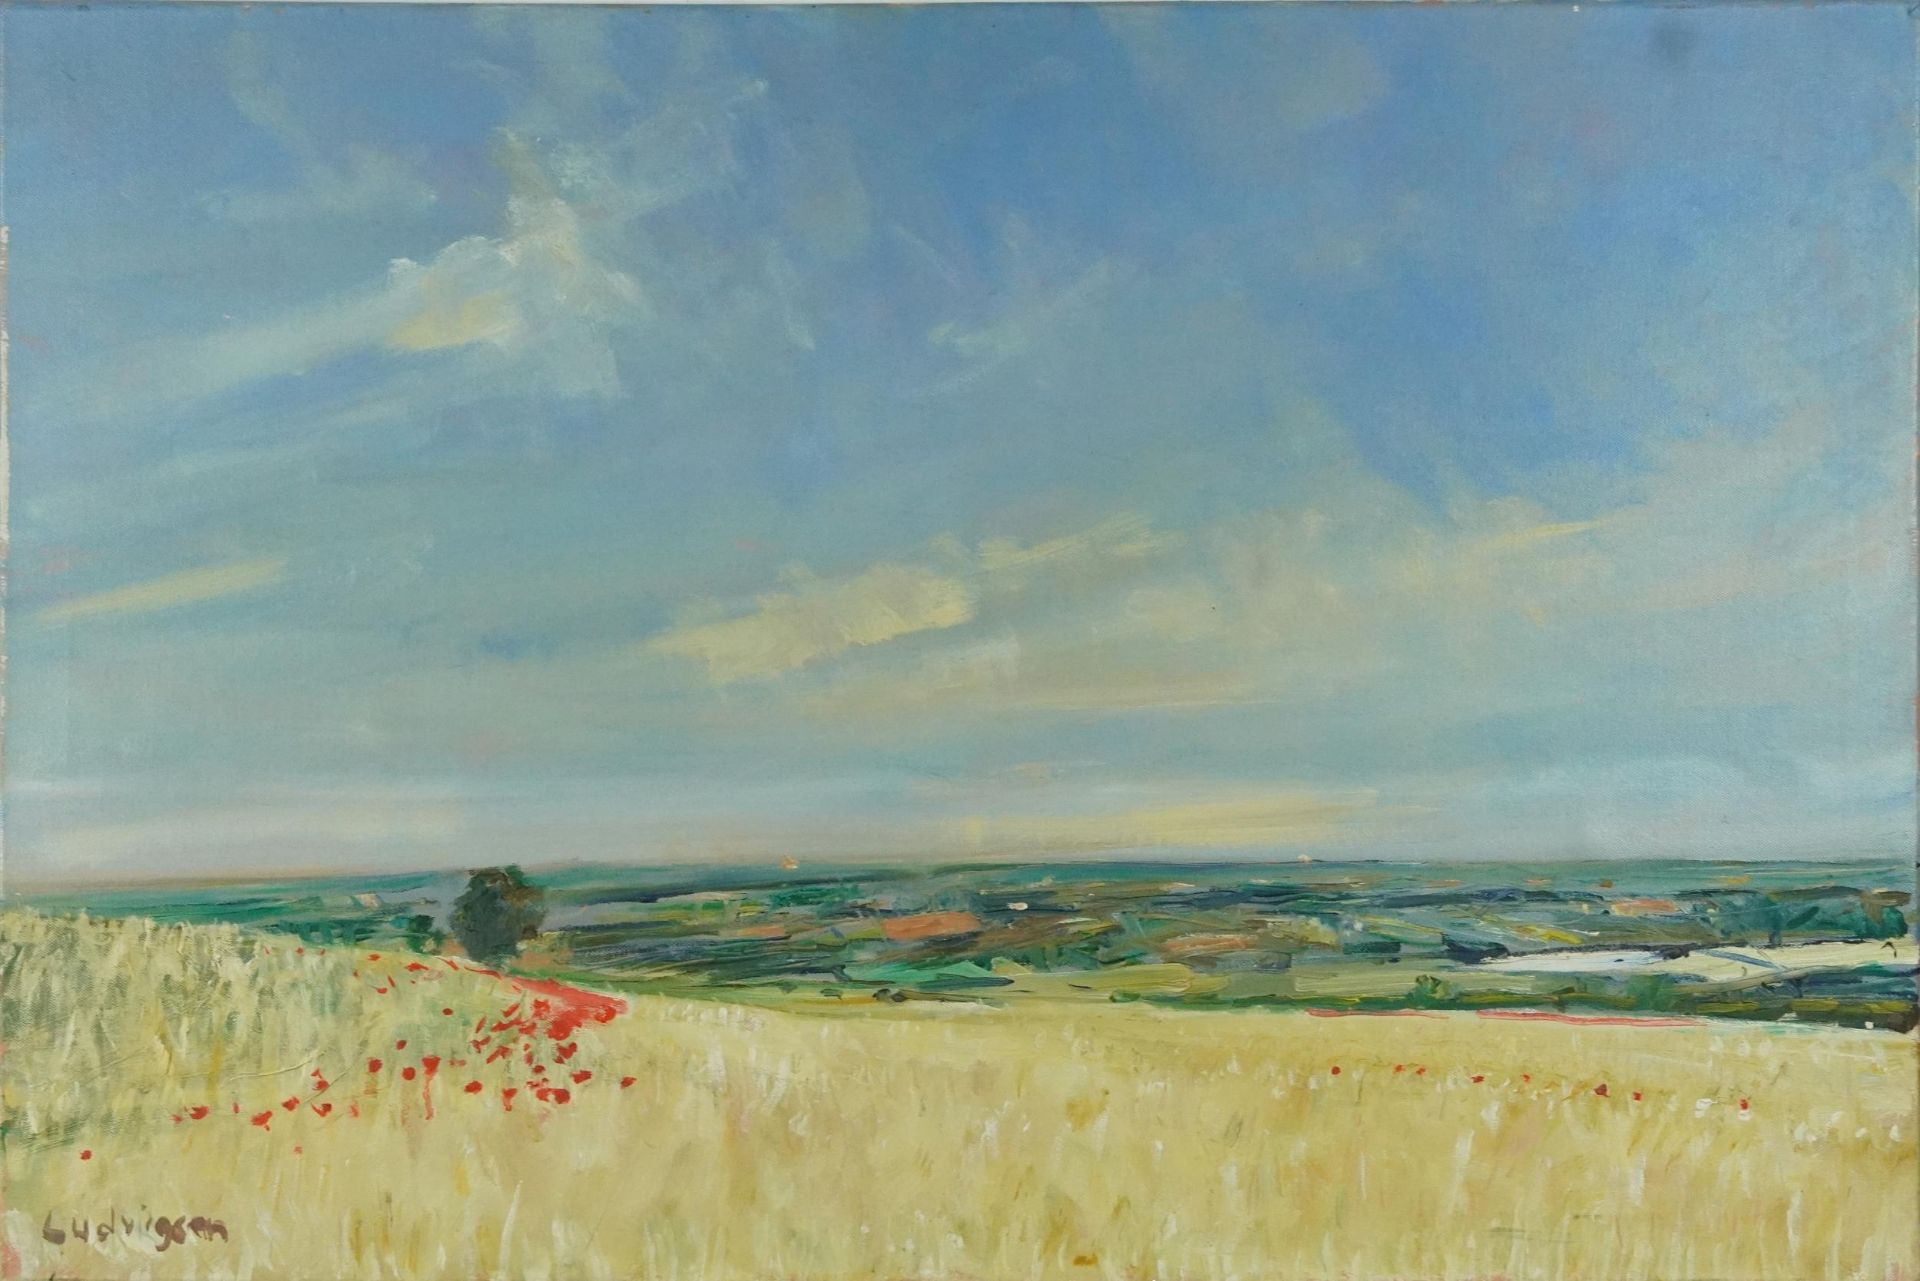 Malcolm Ludvigsen 2009 - Near Thixendale, oil on canvas, unframed, 91.5cm x 61cm